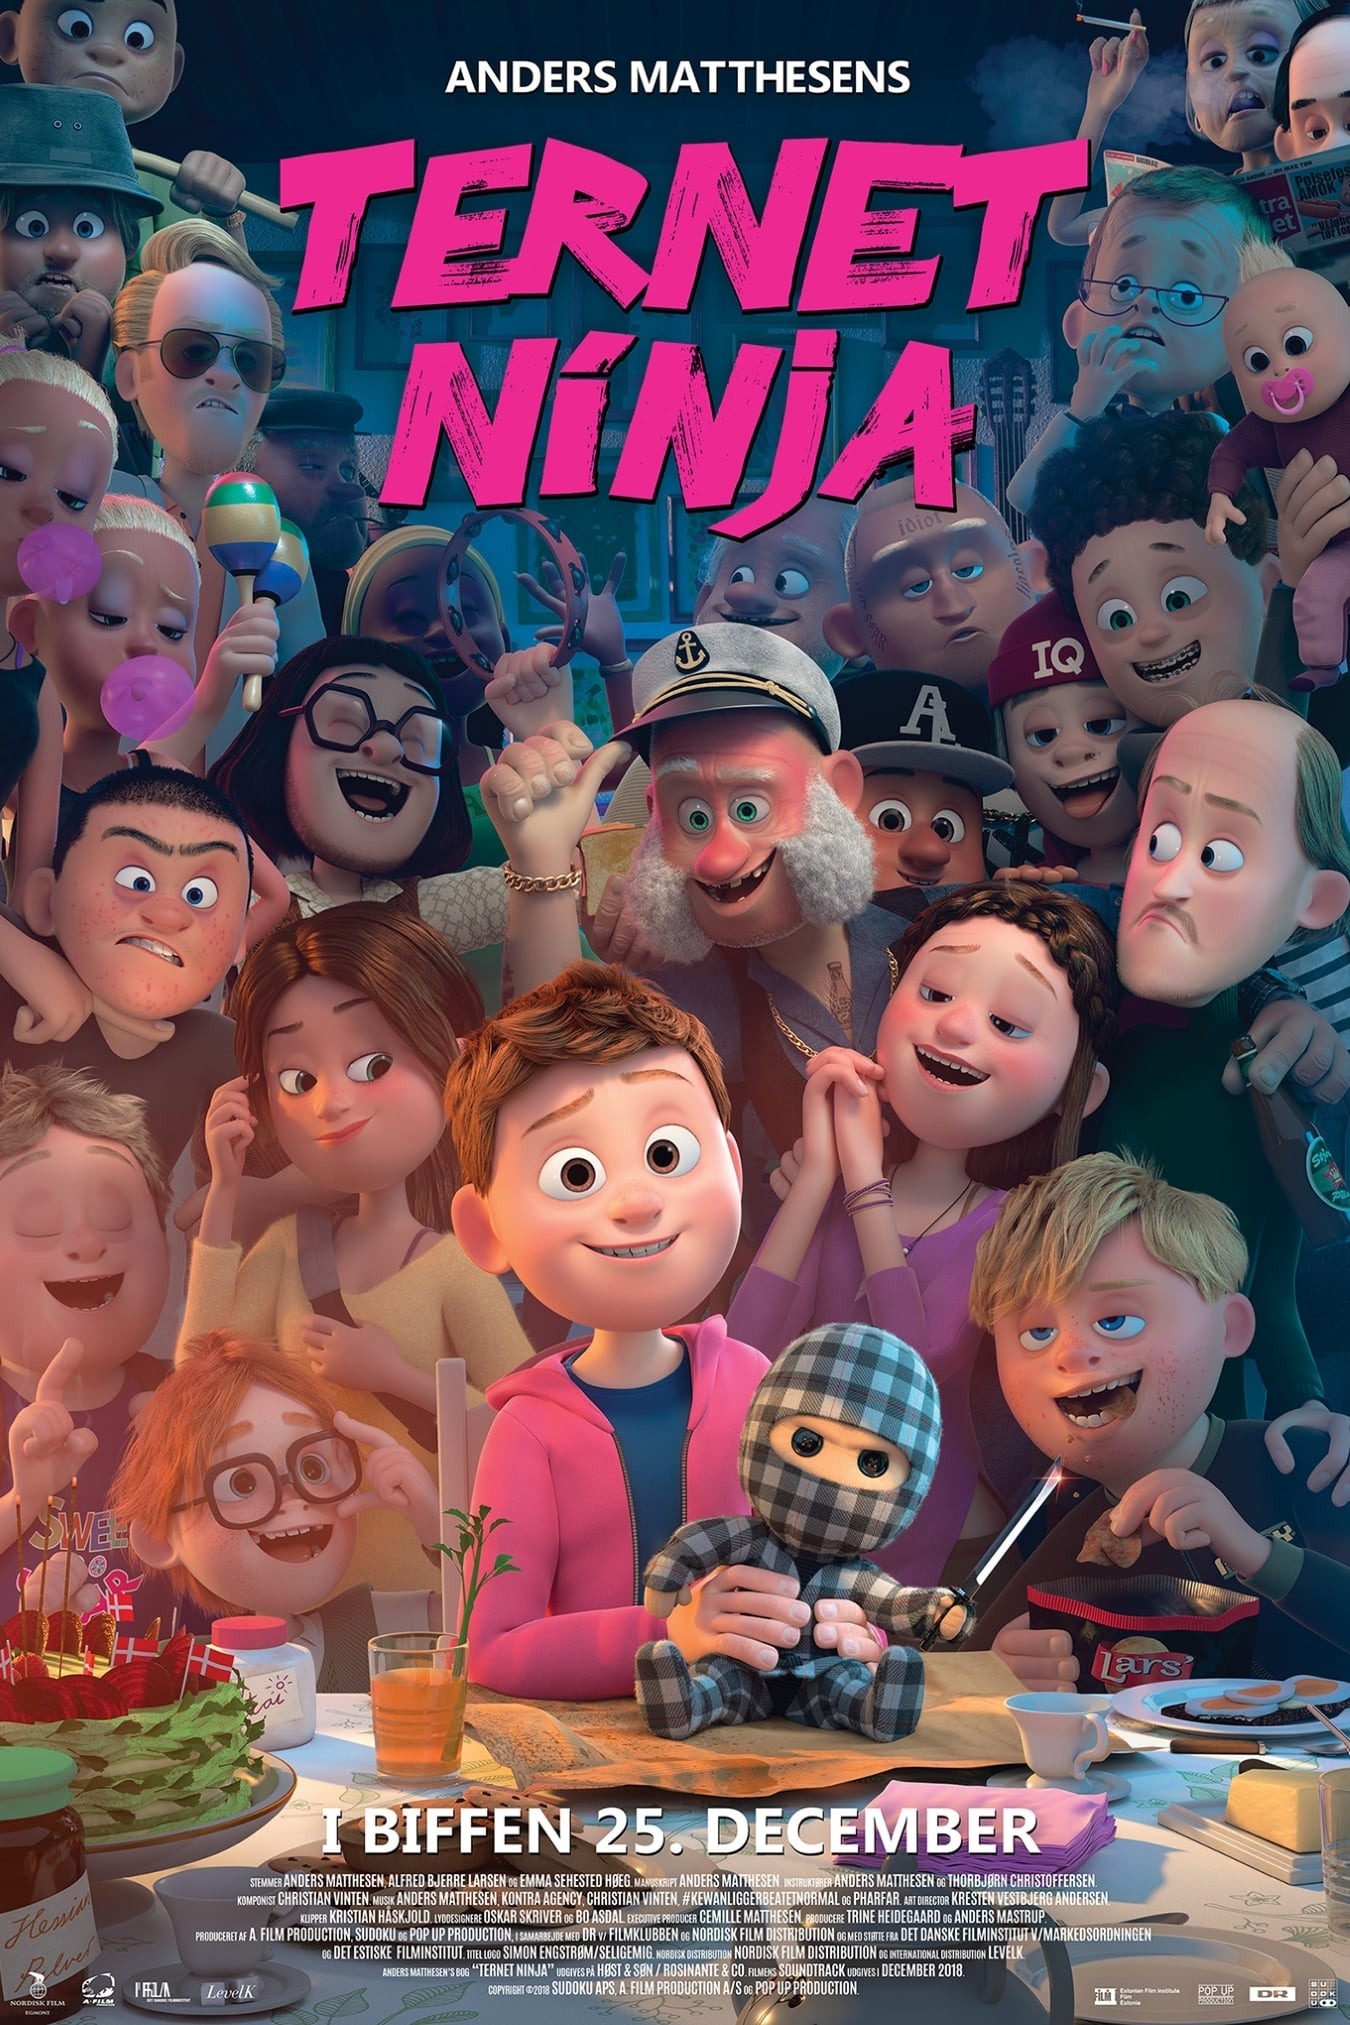 Mega Sized Movie Poster Image for Ternet ninja (#1 of 3)